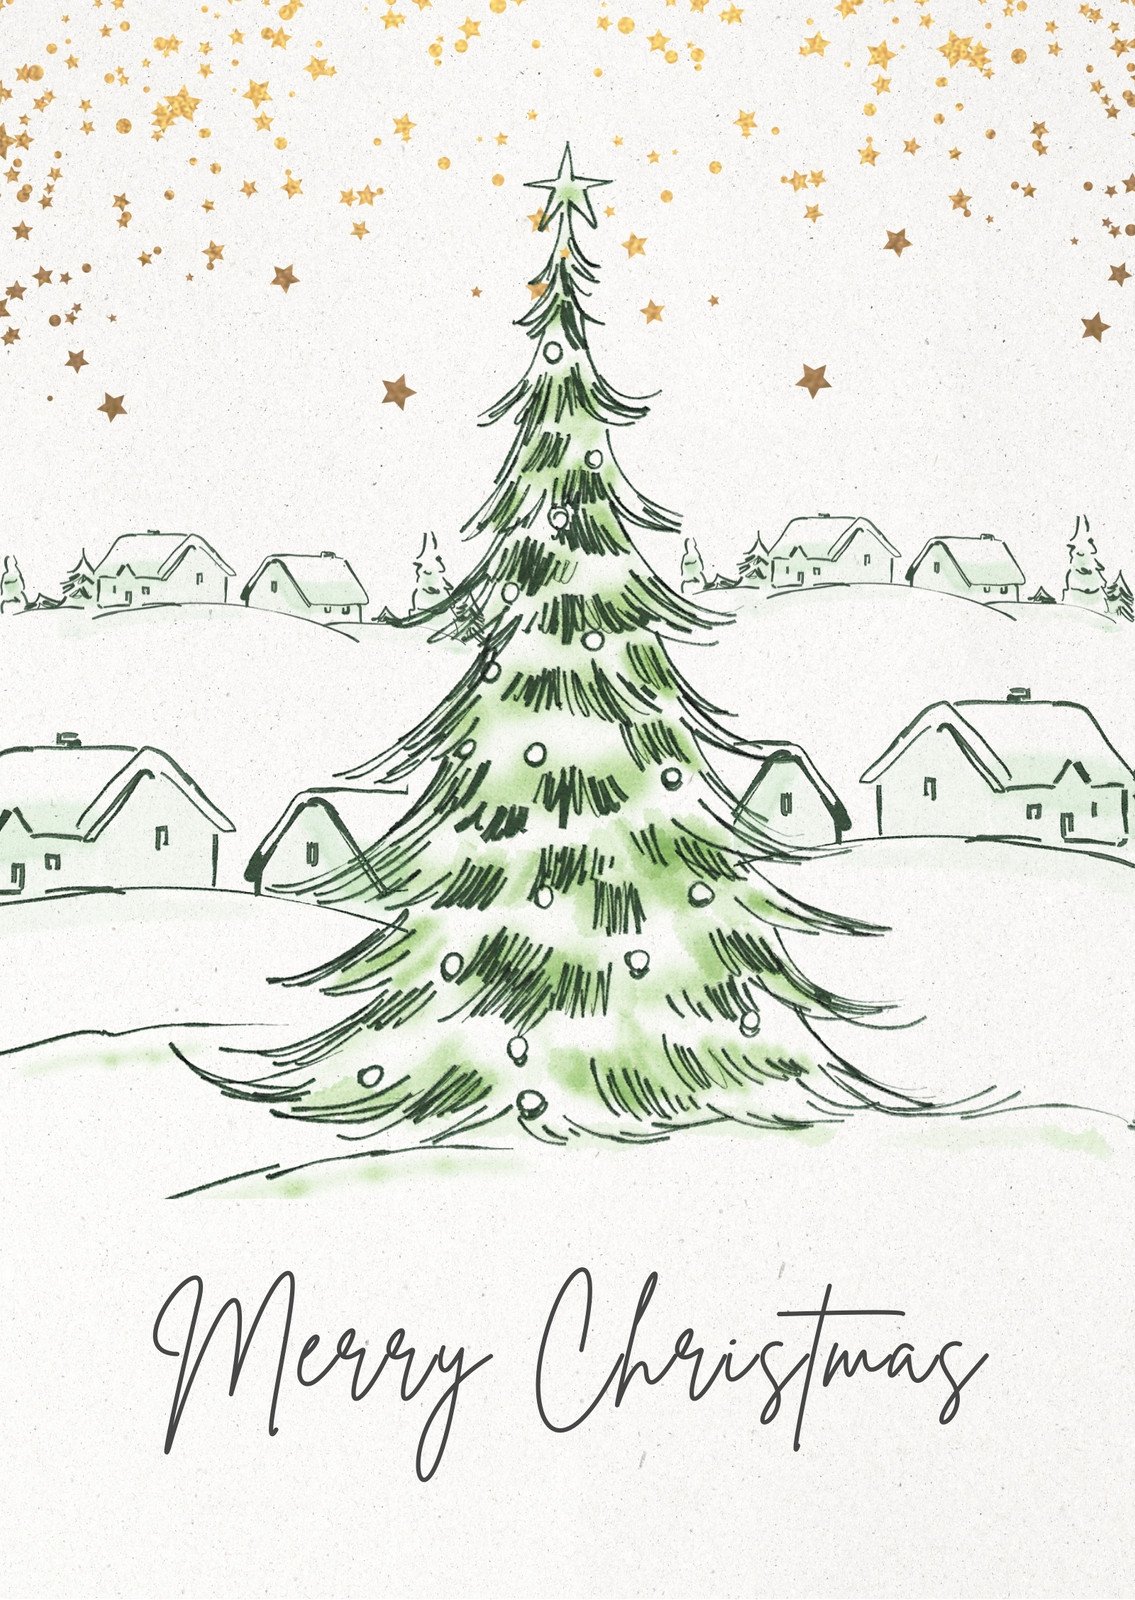 Customize 476+ Cute Christmas Card Templates Online - Canva